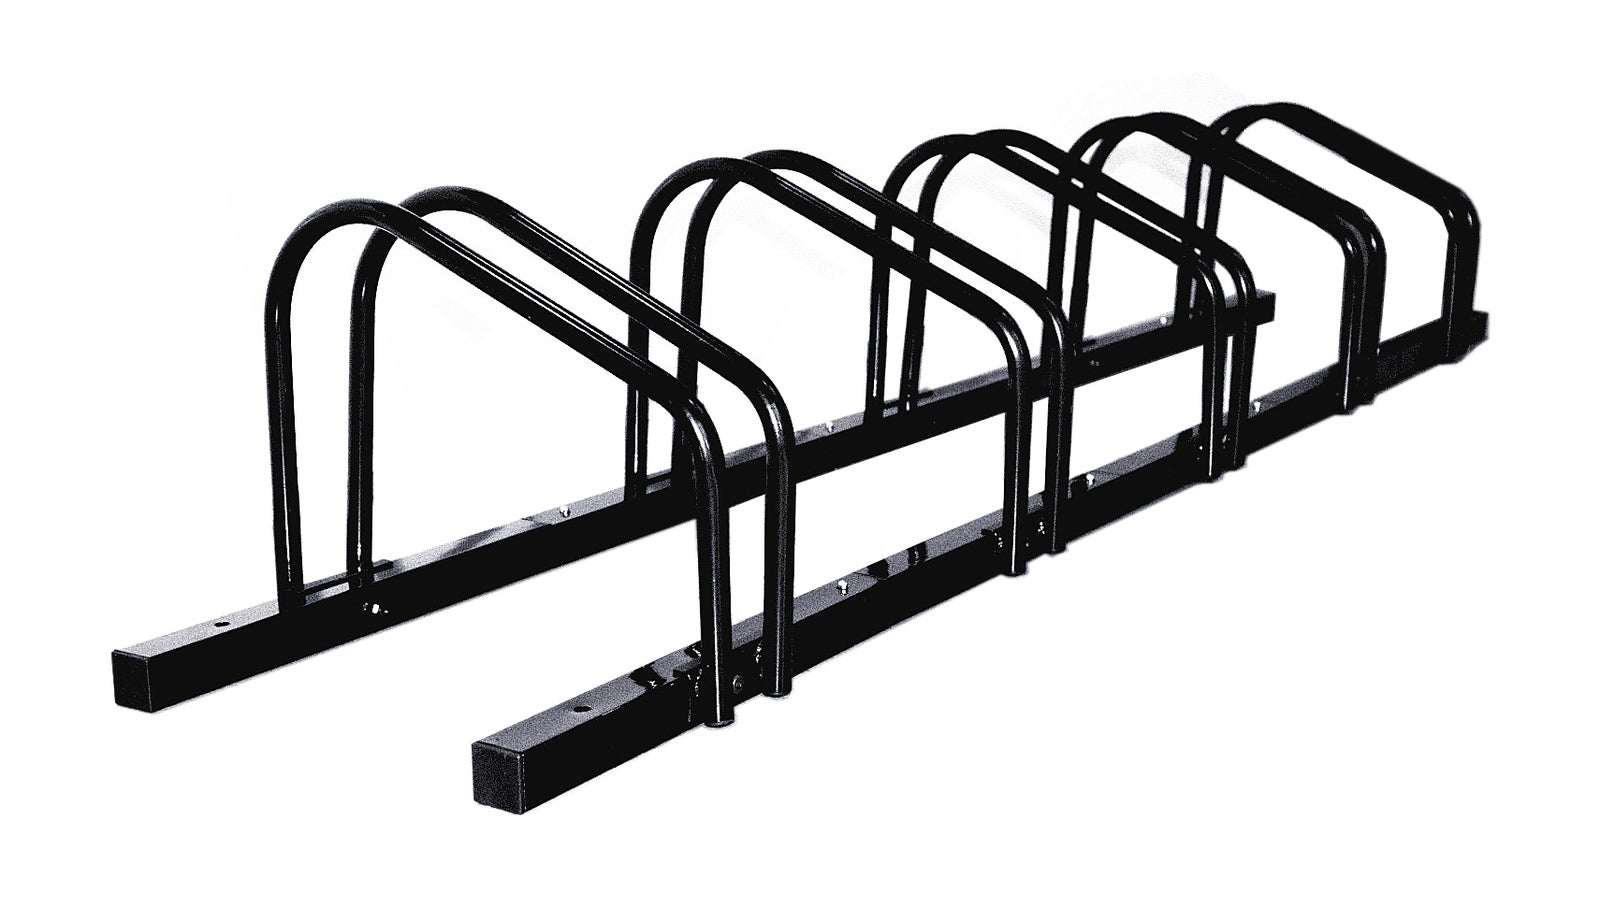 Velobici 1 - 5 Bike Floor Parking Rack Storage Stand Bicycle Black